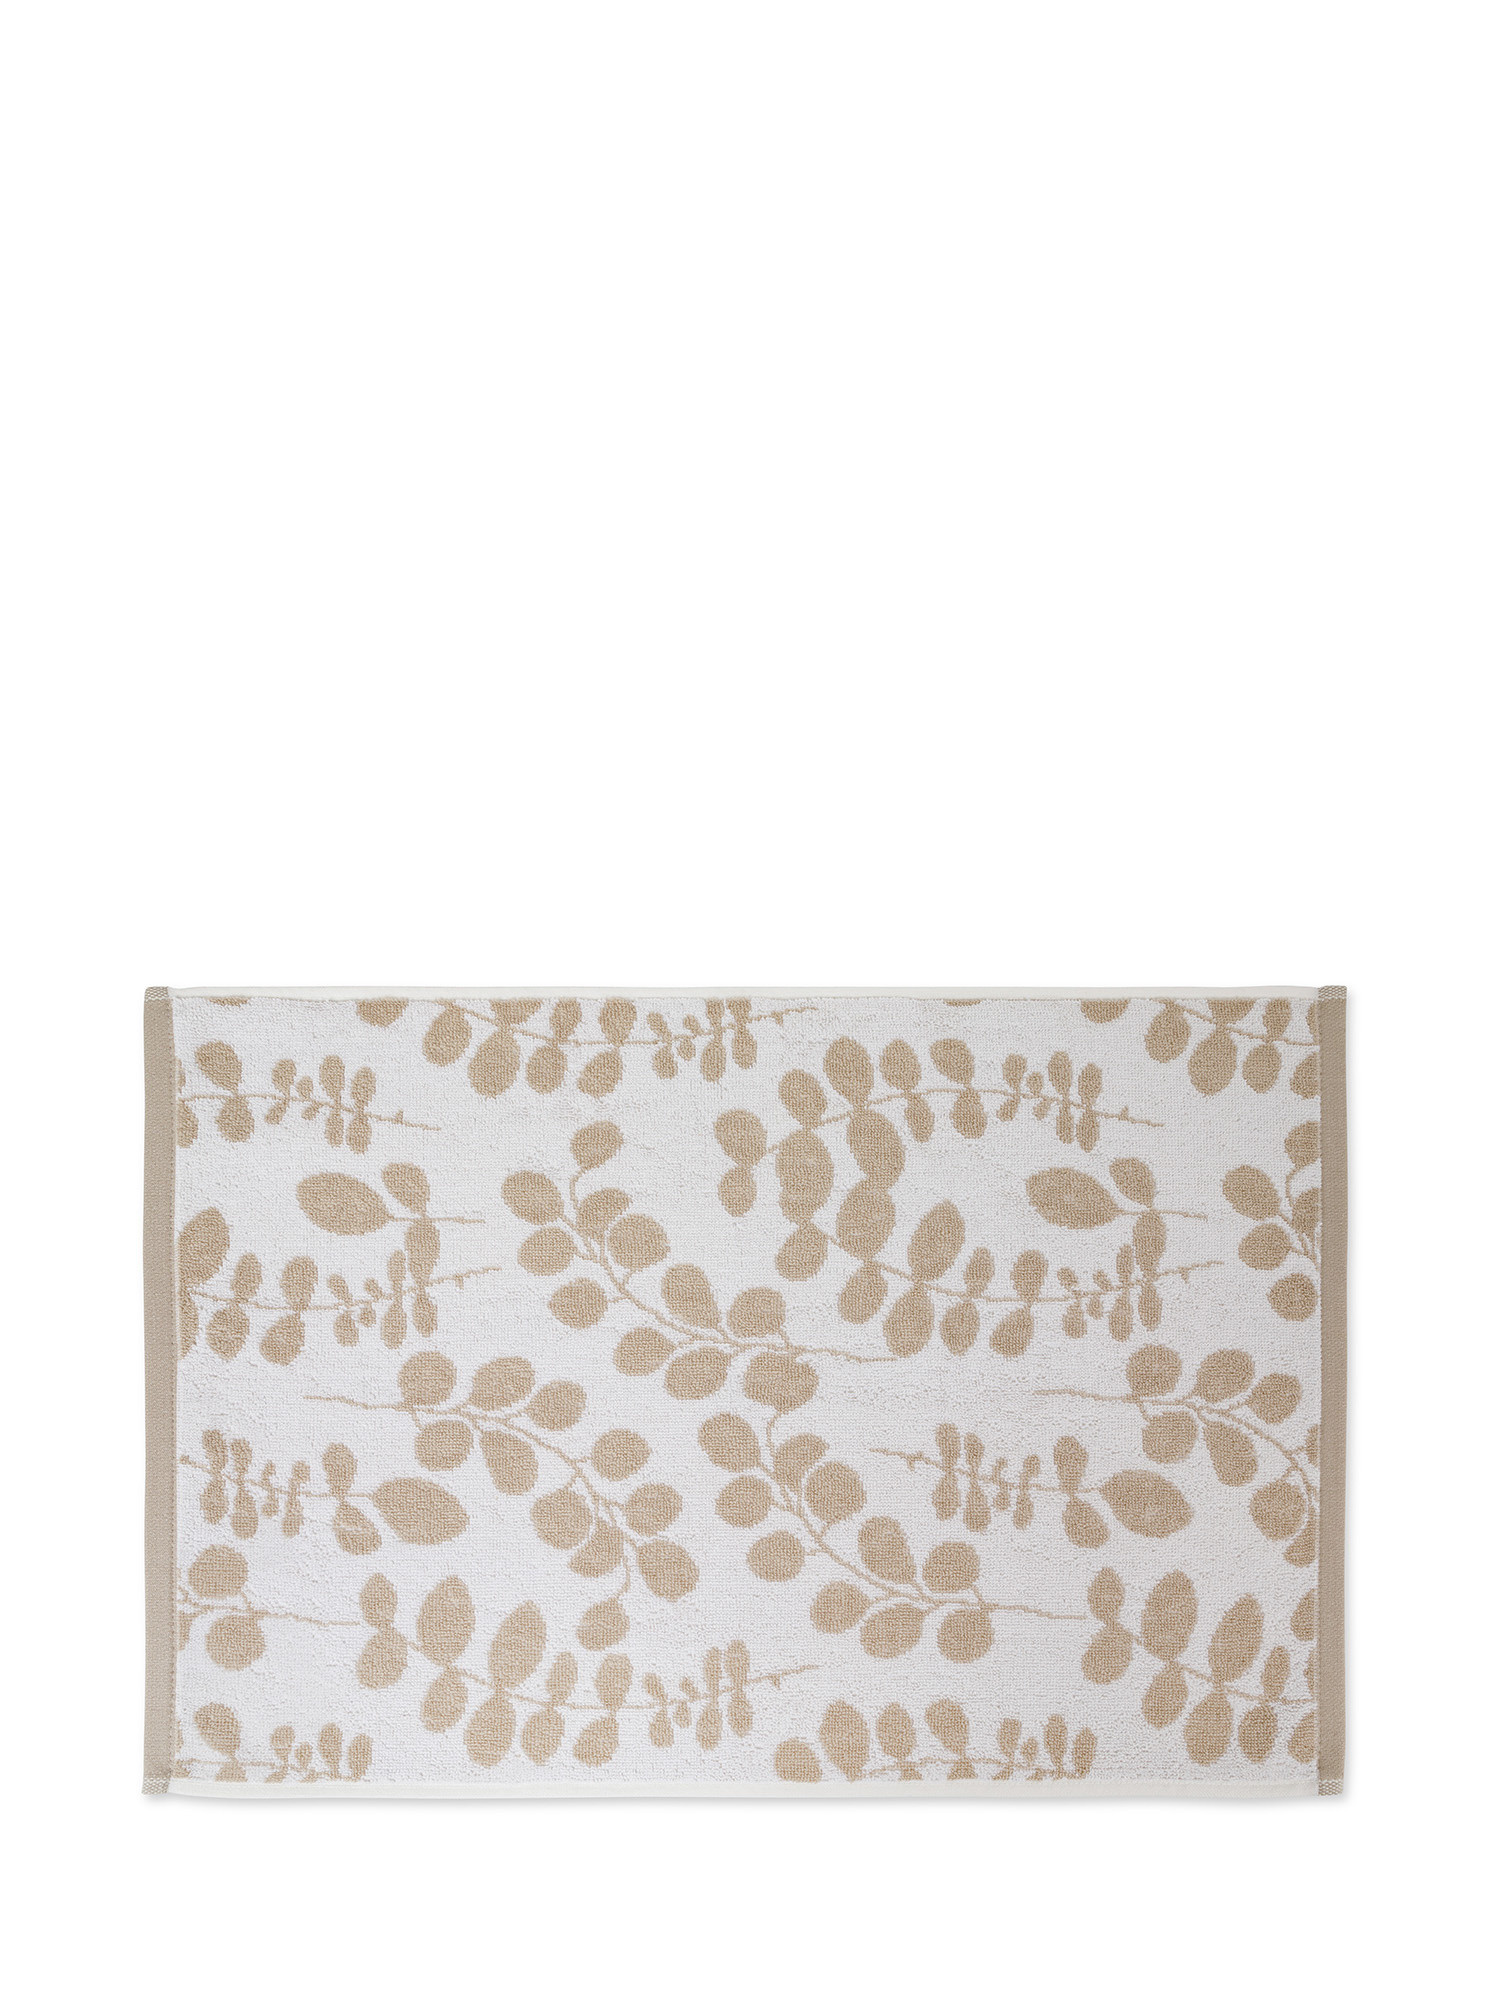 Asciugamano spugna di cotone motivo foliage, Beige, large image number 1